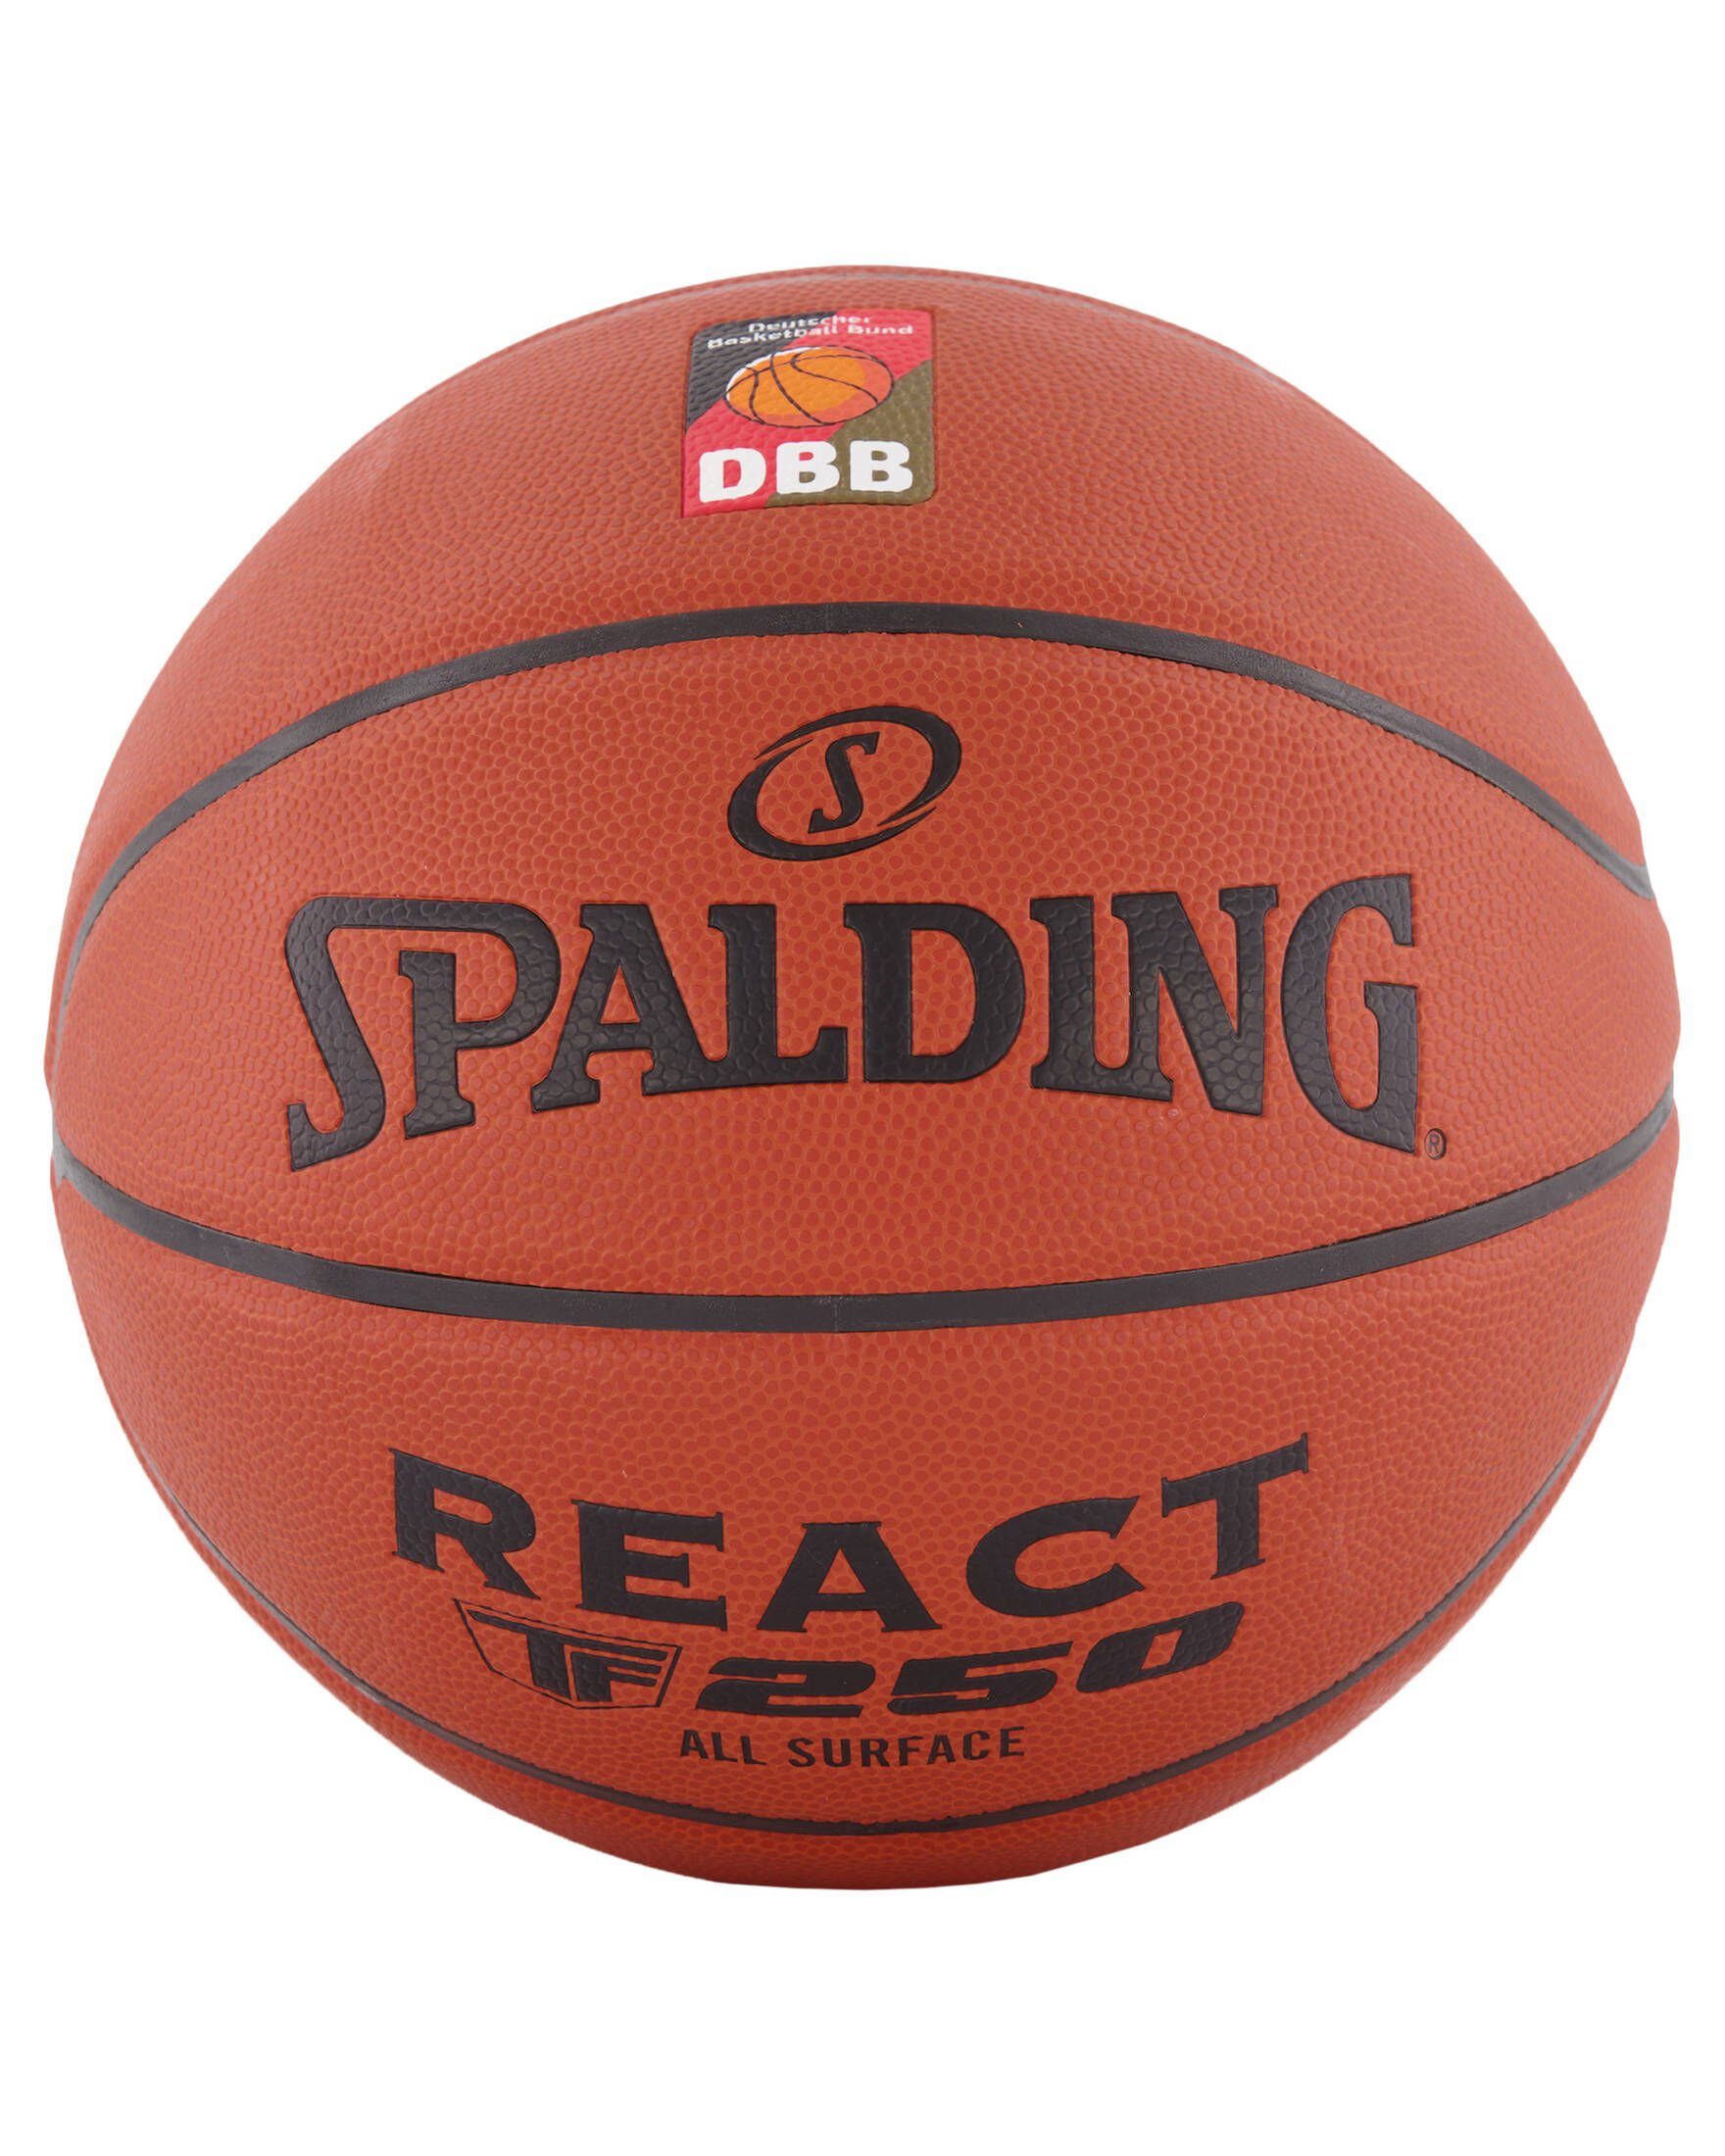 Spalding Basketball Basketball TF REACT 250 SERIES ORANGE